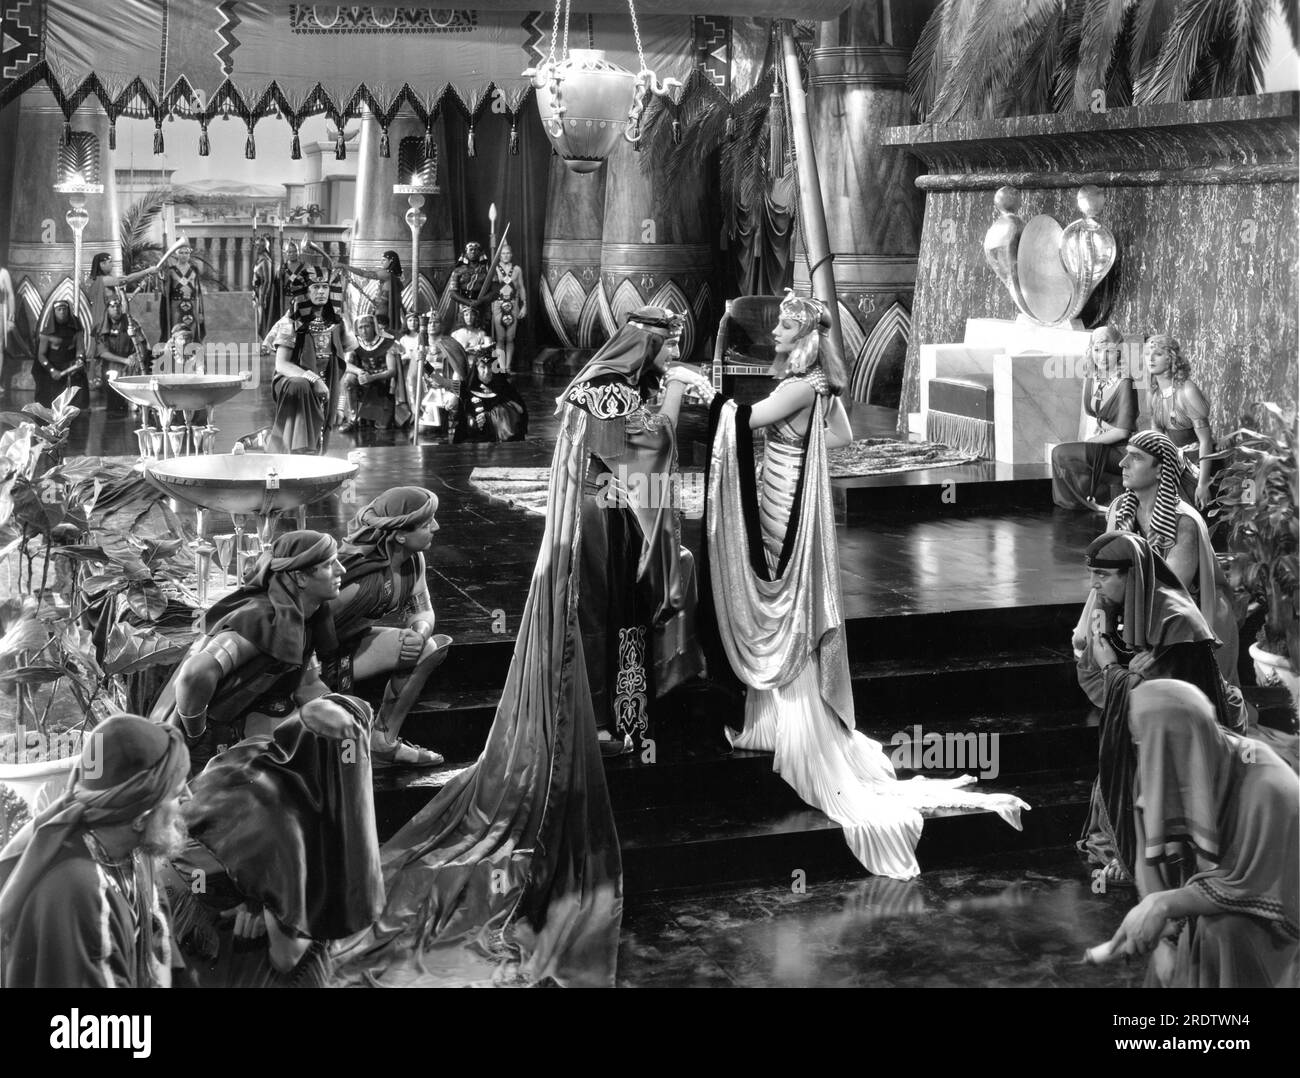 IRVING PICHEL JOSEPH SCHILDKRAUT CLAUDETTE COLBERT GRACE DURKIN and ELEANOR PHELPS in CLEOPATRA 1934 director CECIL B. DeMILLE Miss Colbert's costumes Travis Banton Paramount Pictures Stock Photo